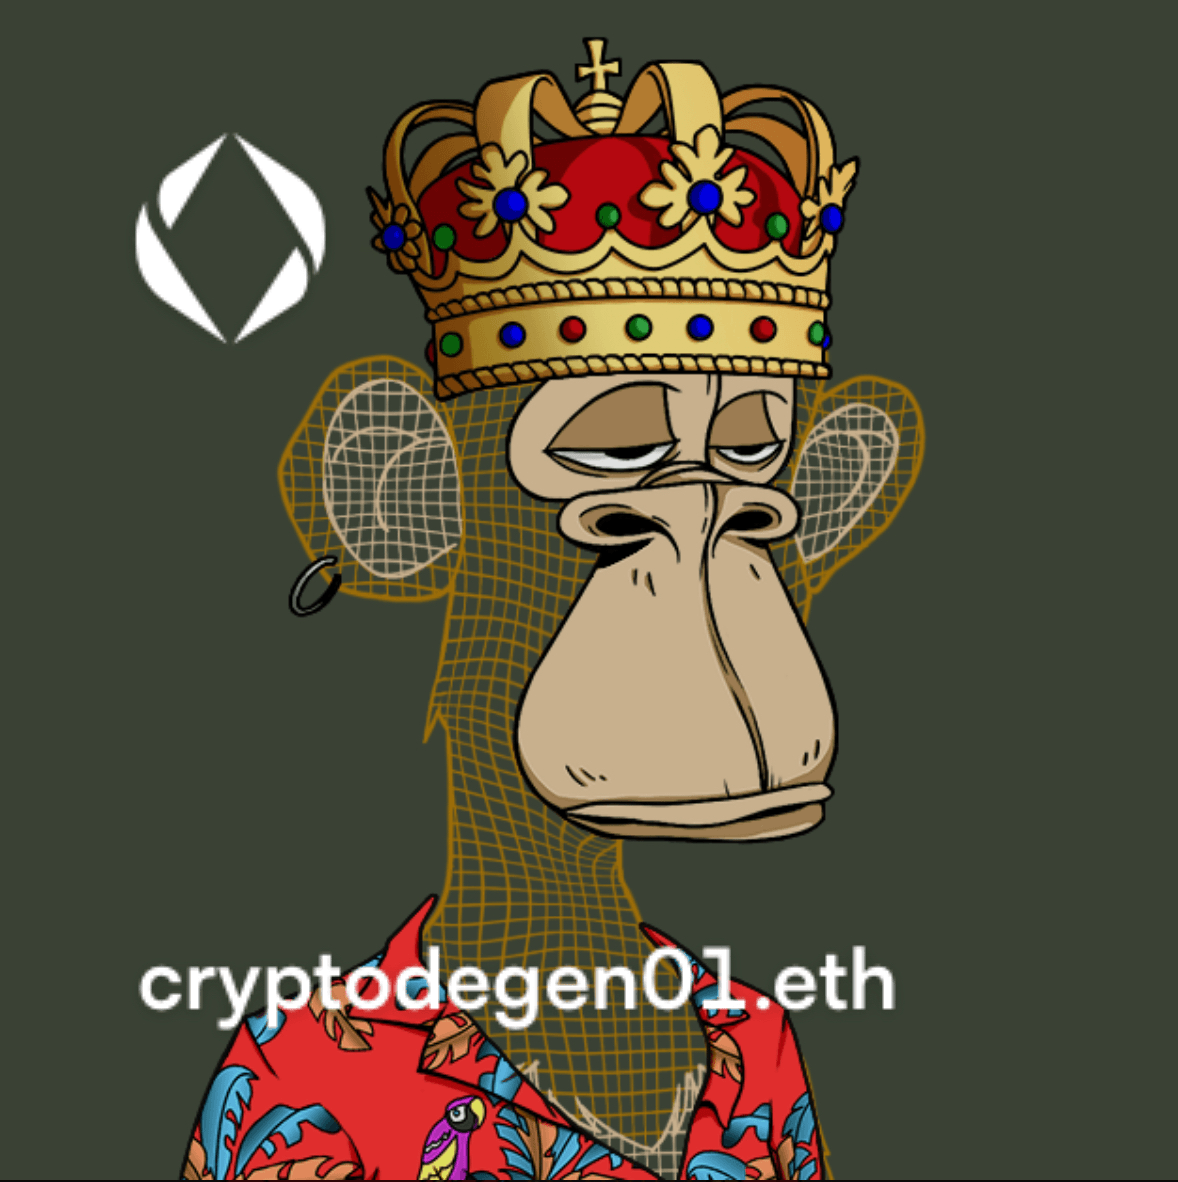 CryptoDegen01